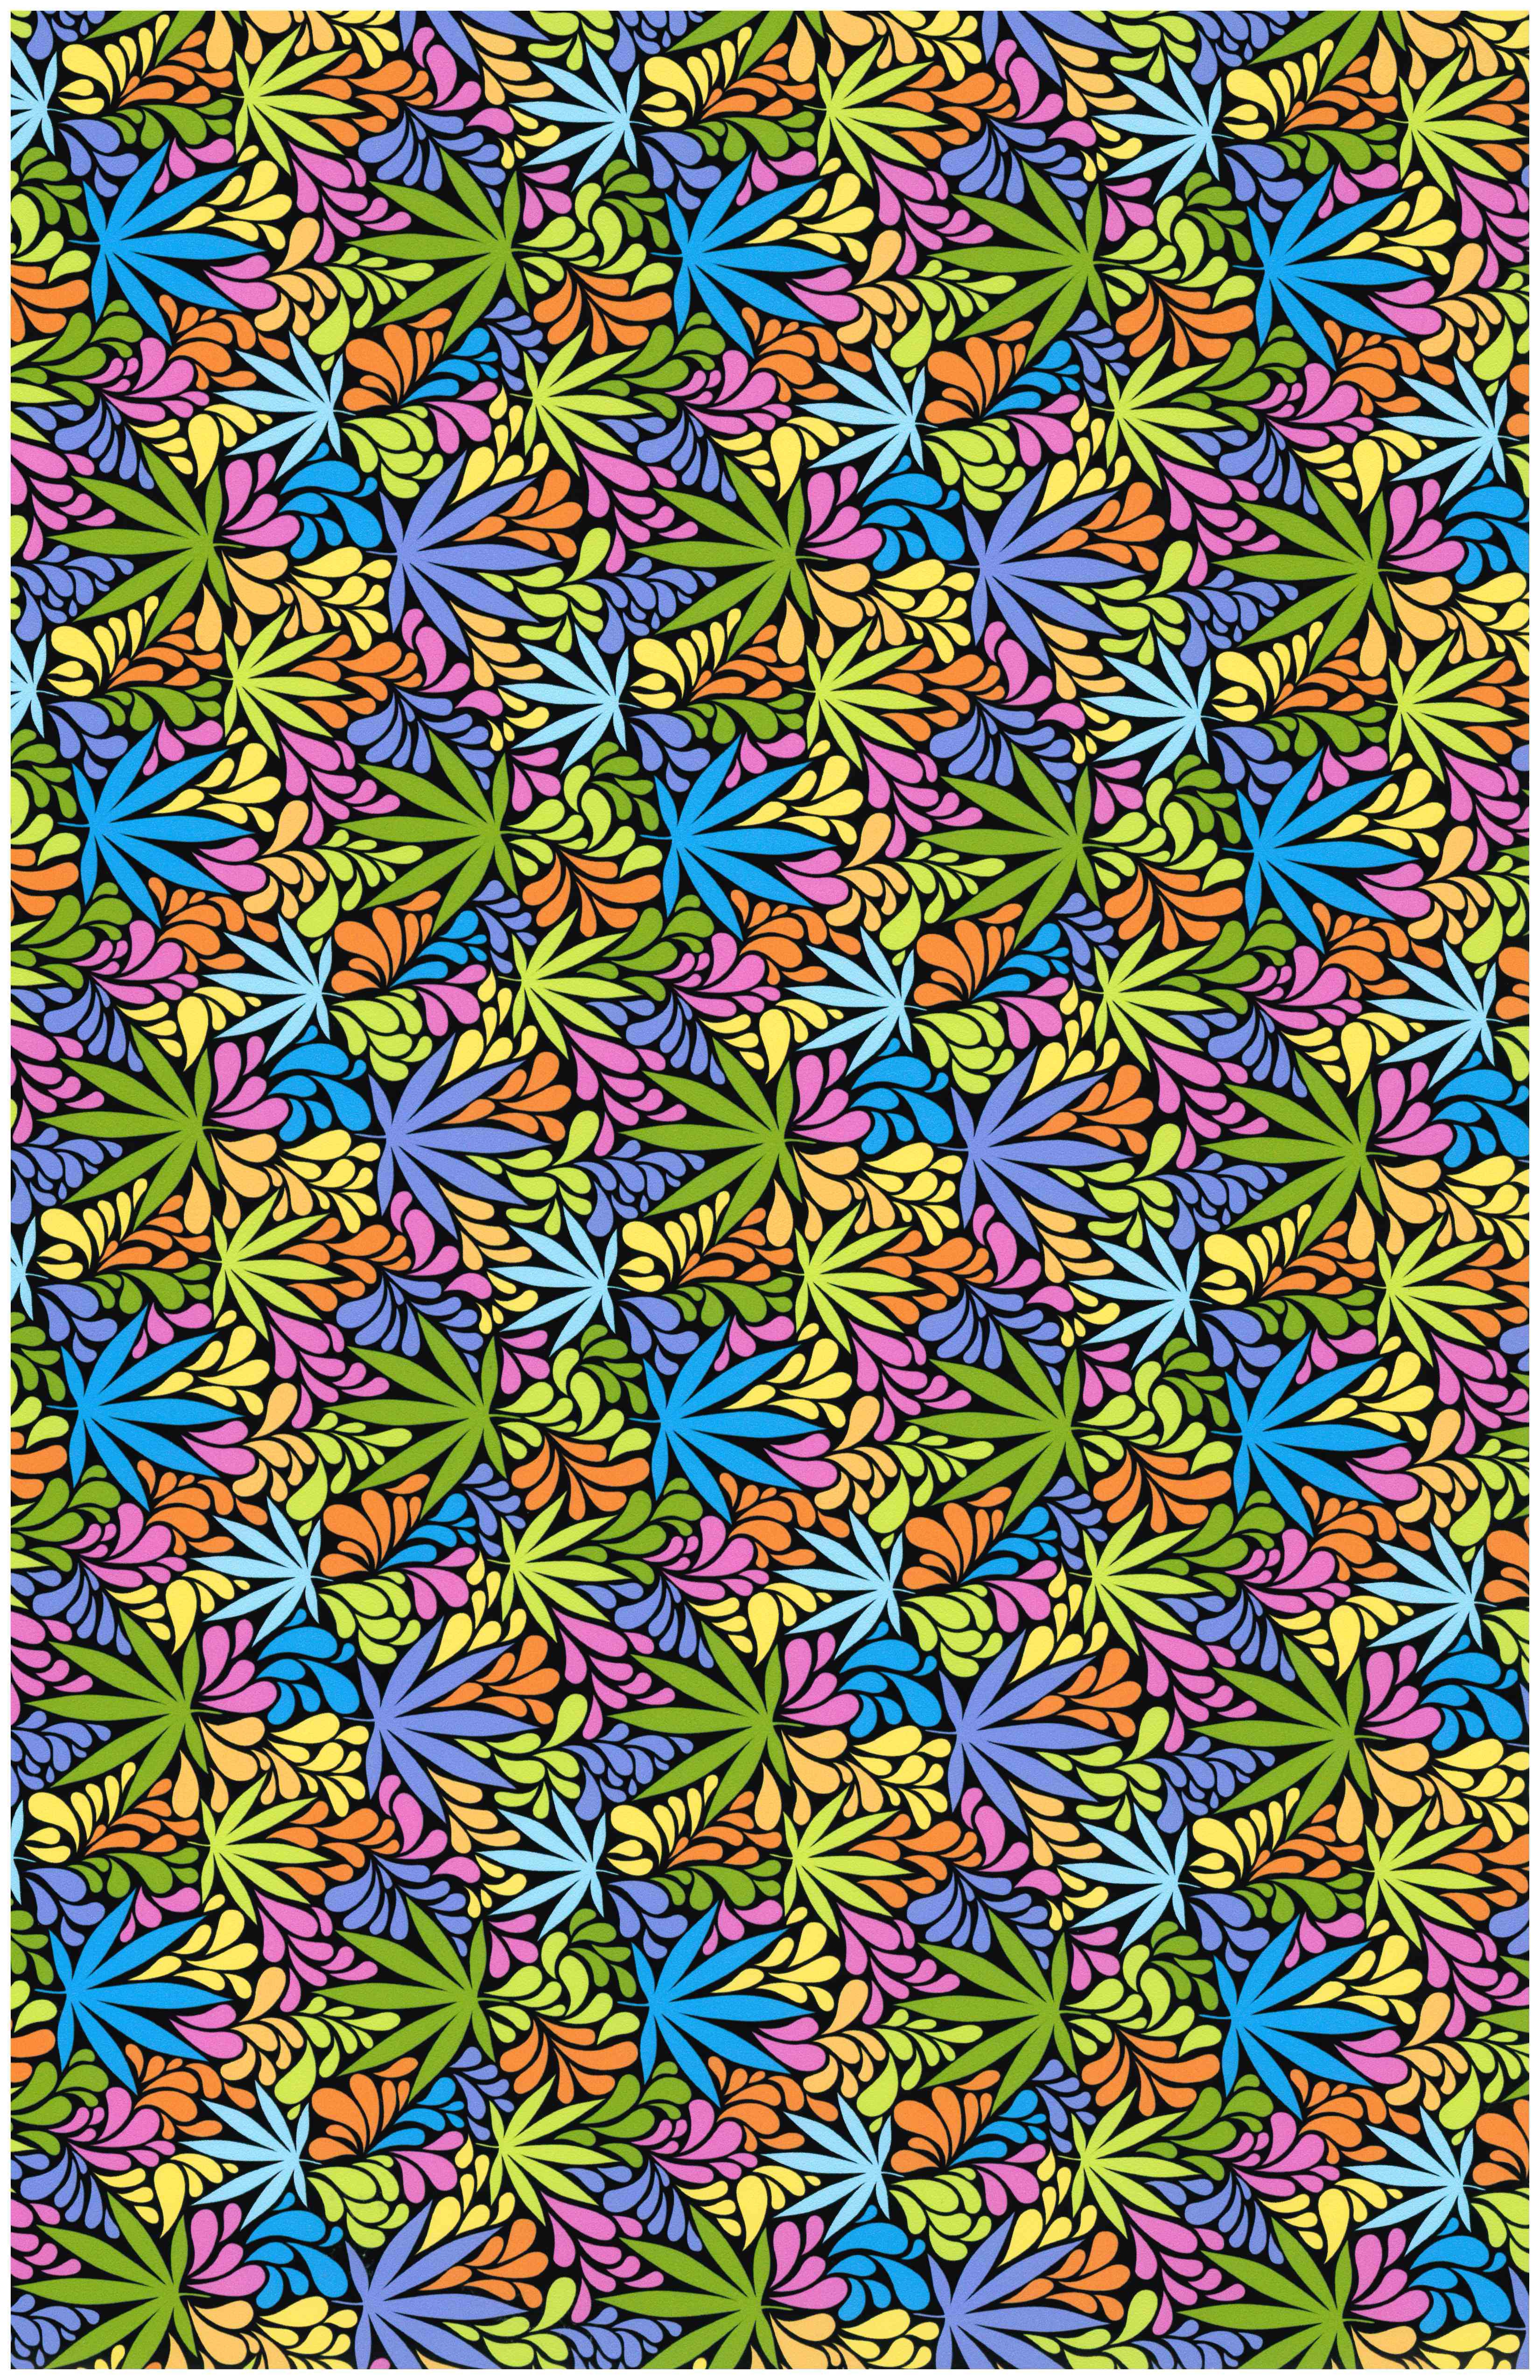 SpecialtyPSV Fashion Patterns - PSV-HMP COL - Colored Marijuana